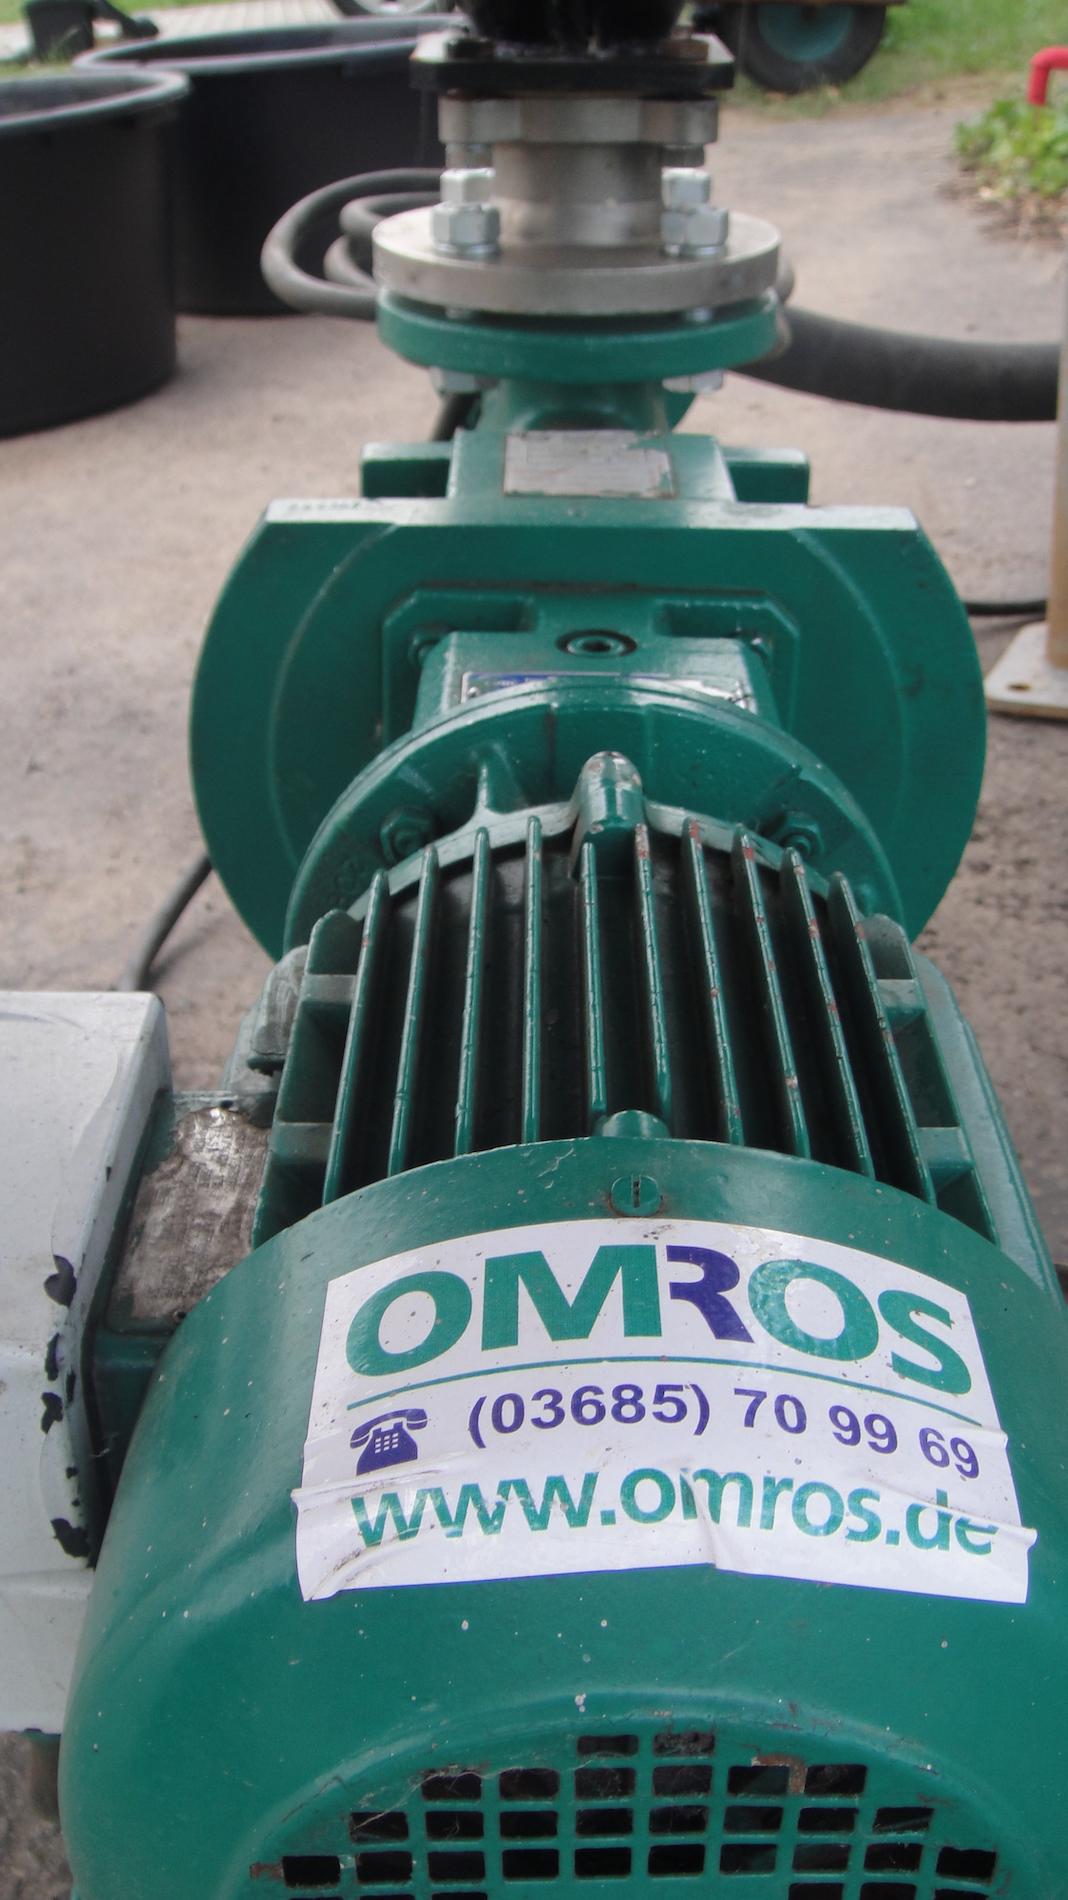 Bilder OMROS Umweltservice GmbH